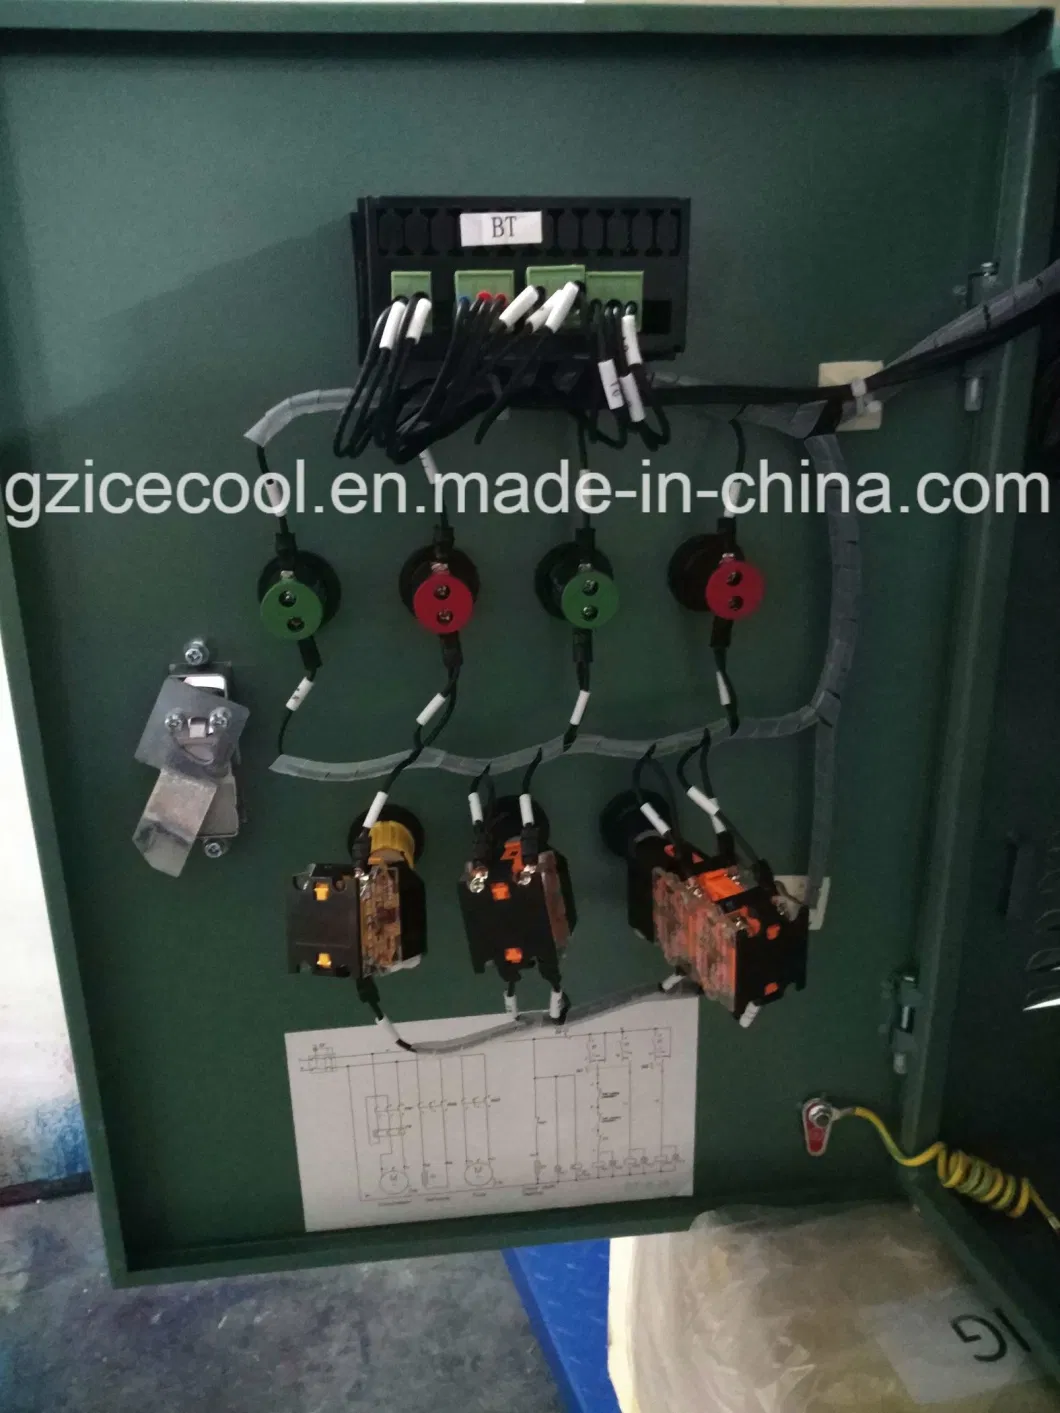 Elitech Refrigerant Unit Electric Temperature Control Cabinet Ecb-5060